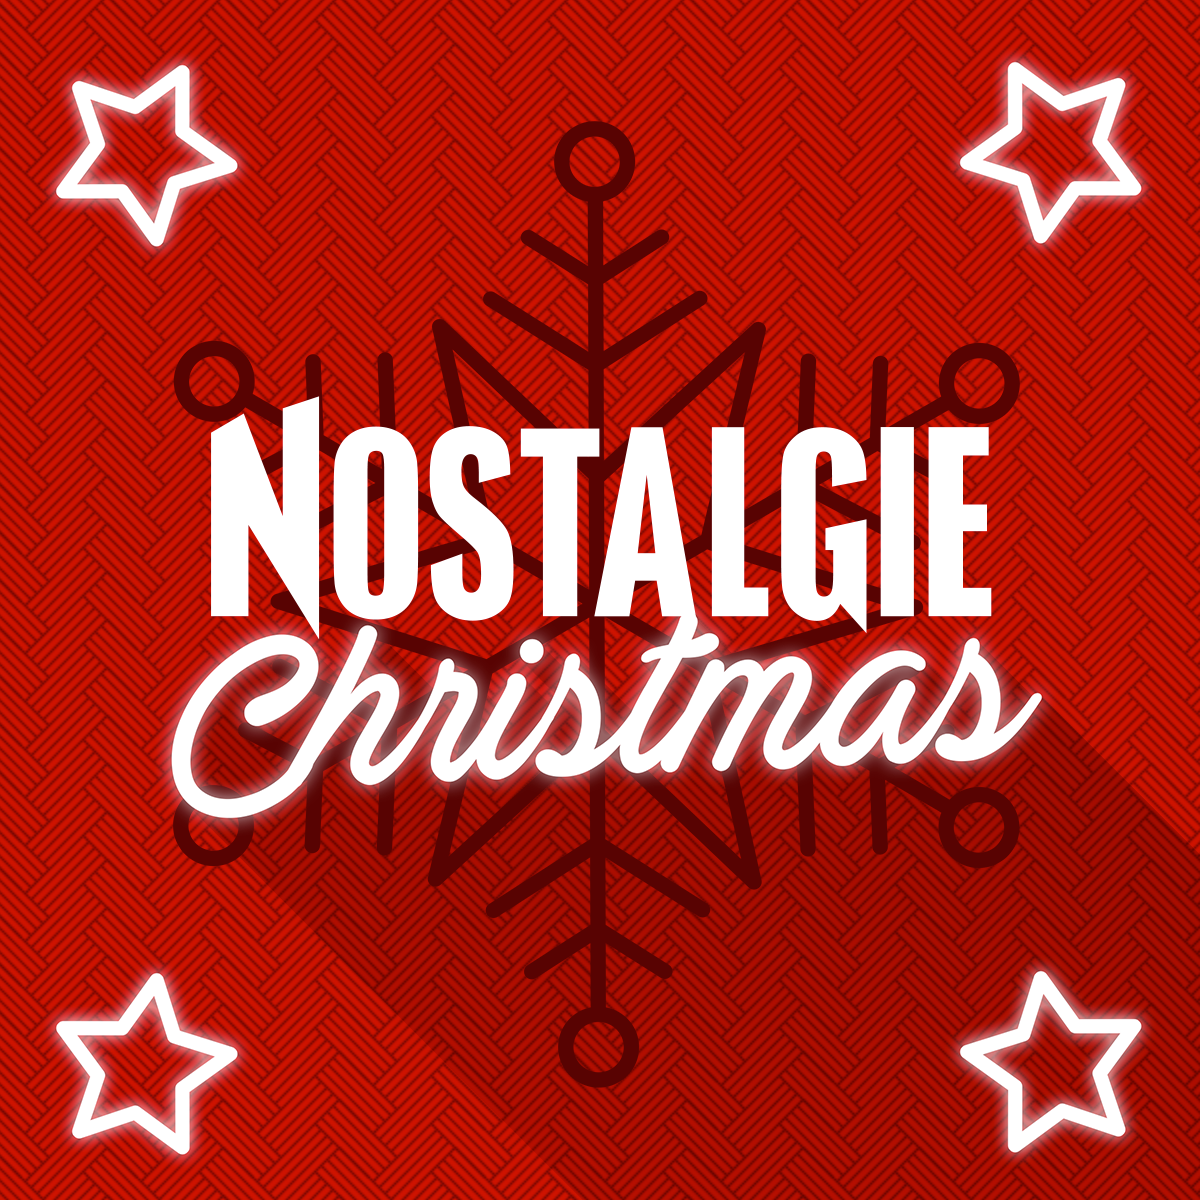 Nostalgie Christmas - logo webradio